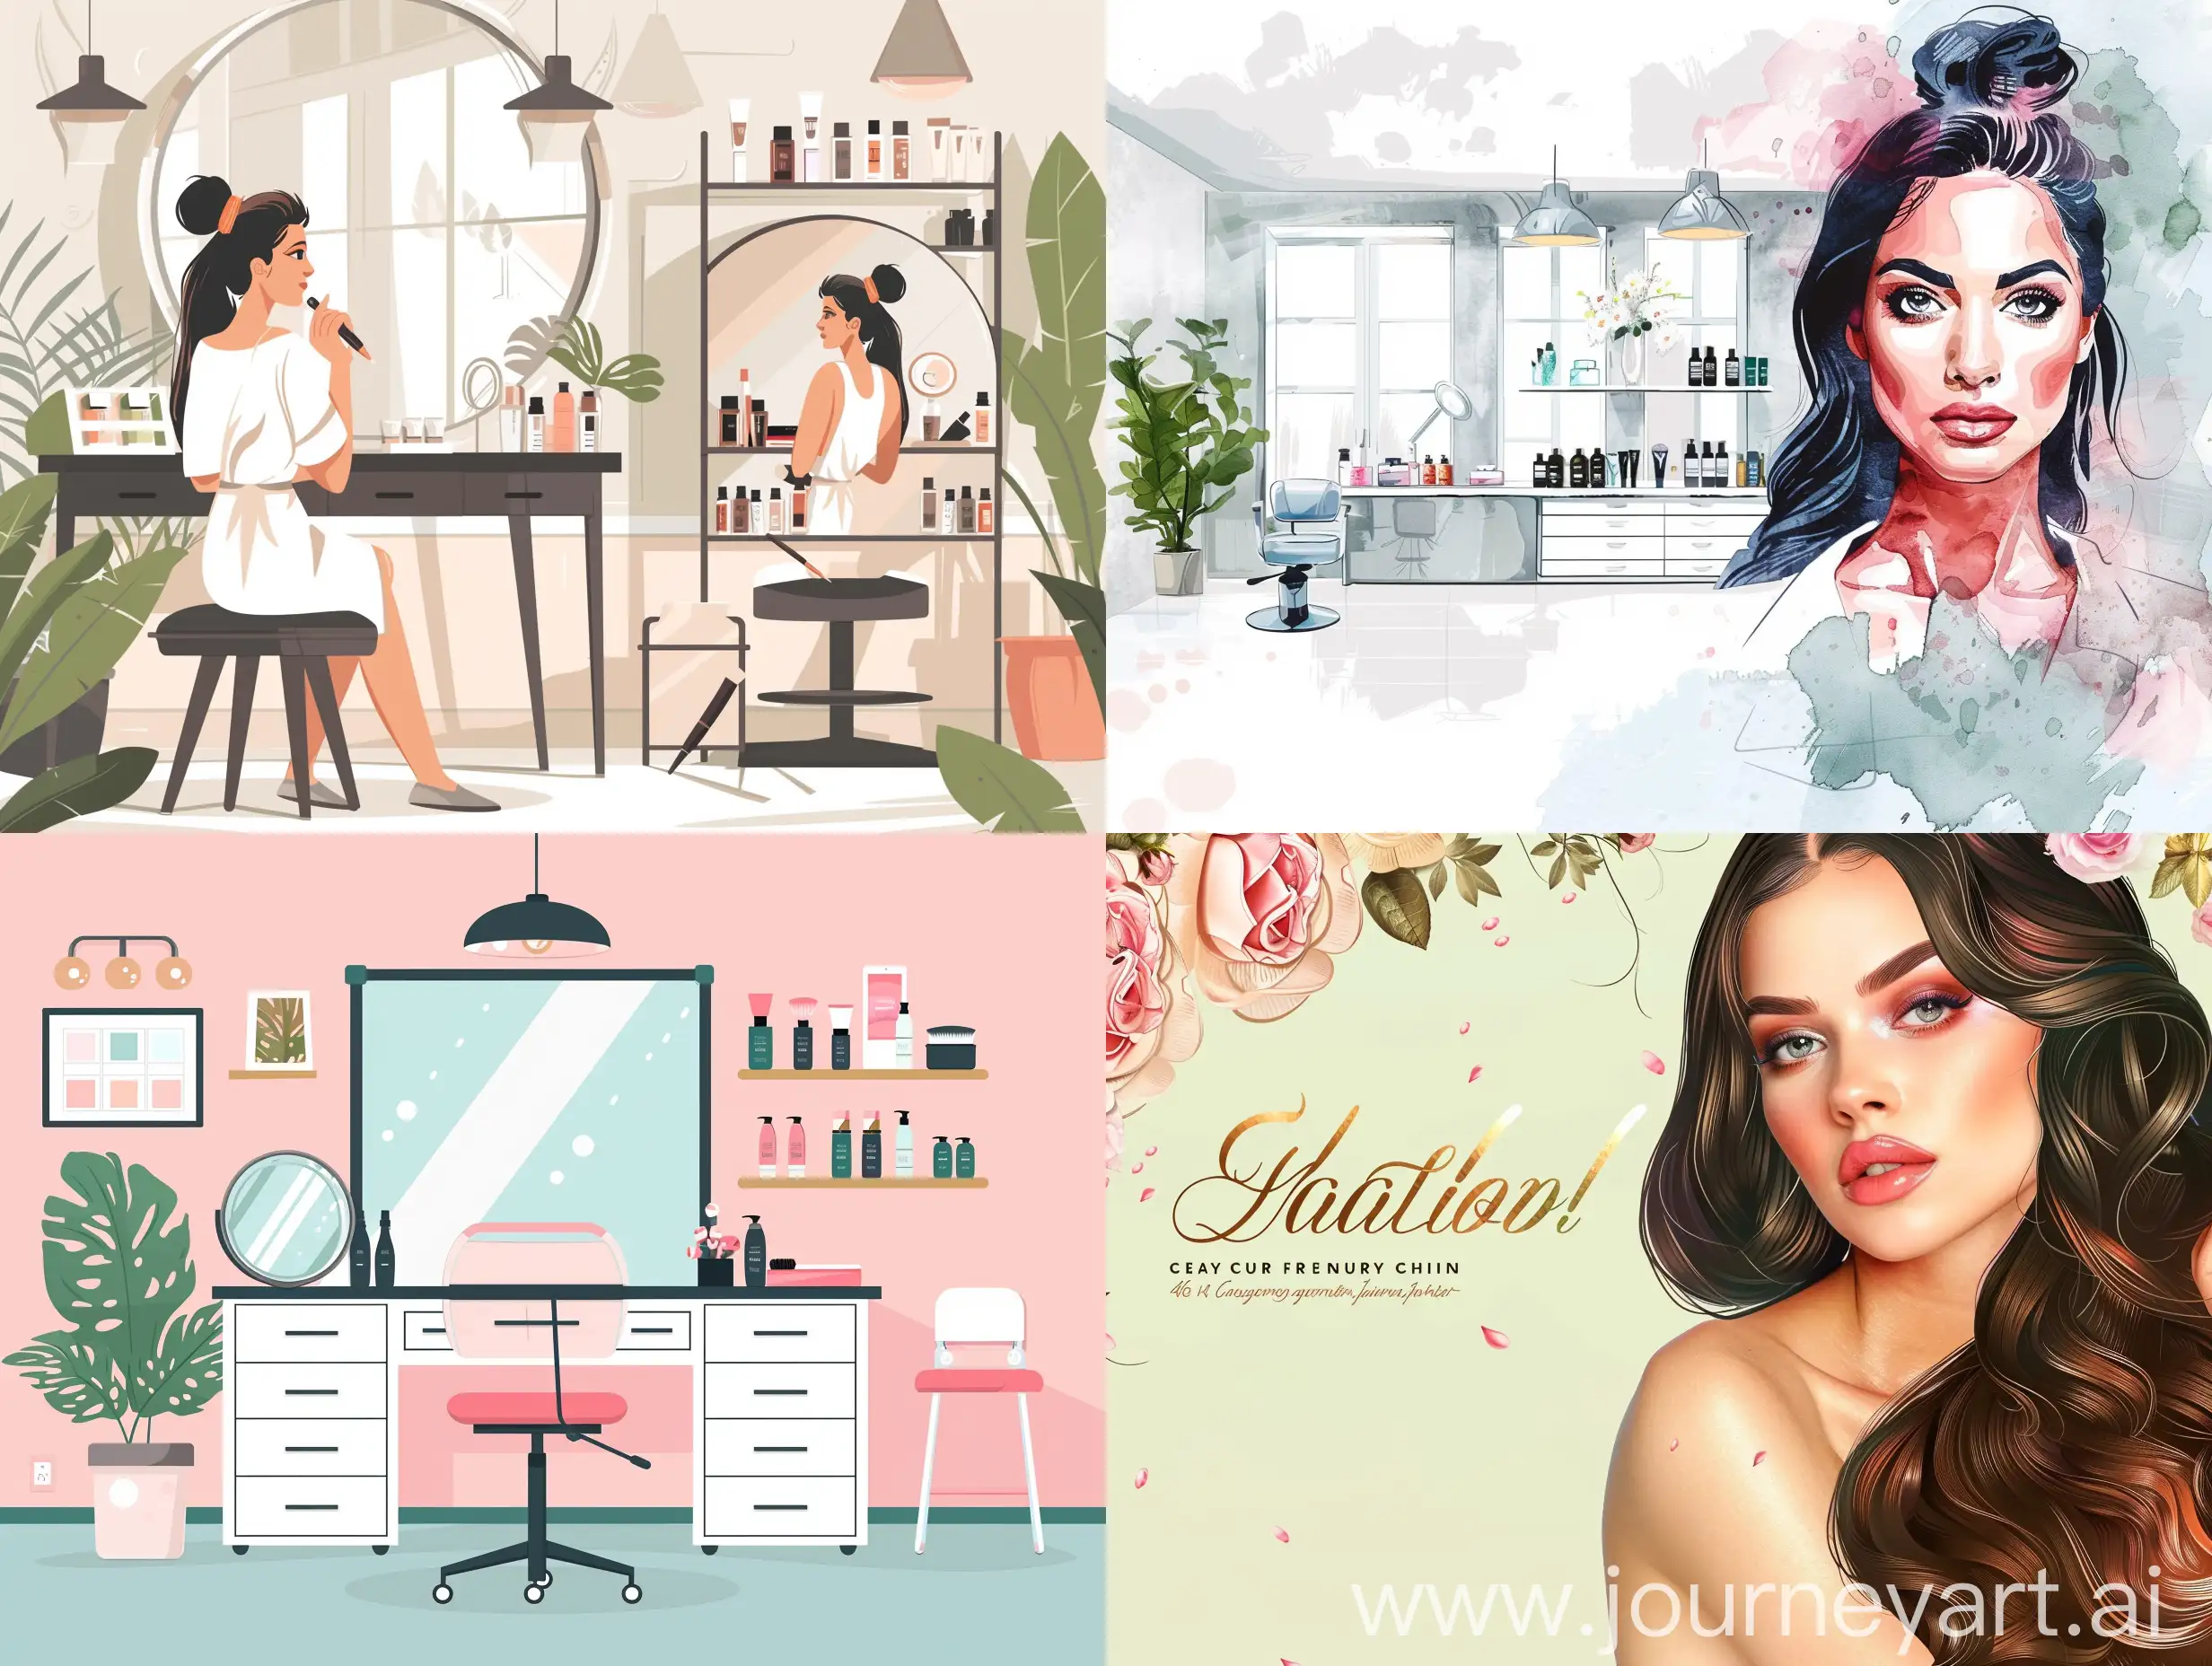 Professional-Beauty-Salon-Web-Banner-with-Modern-Design